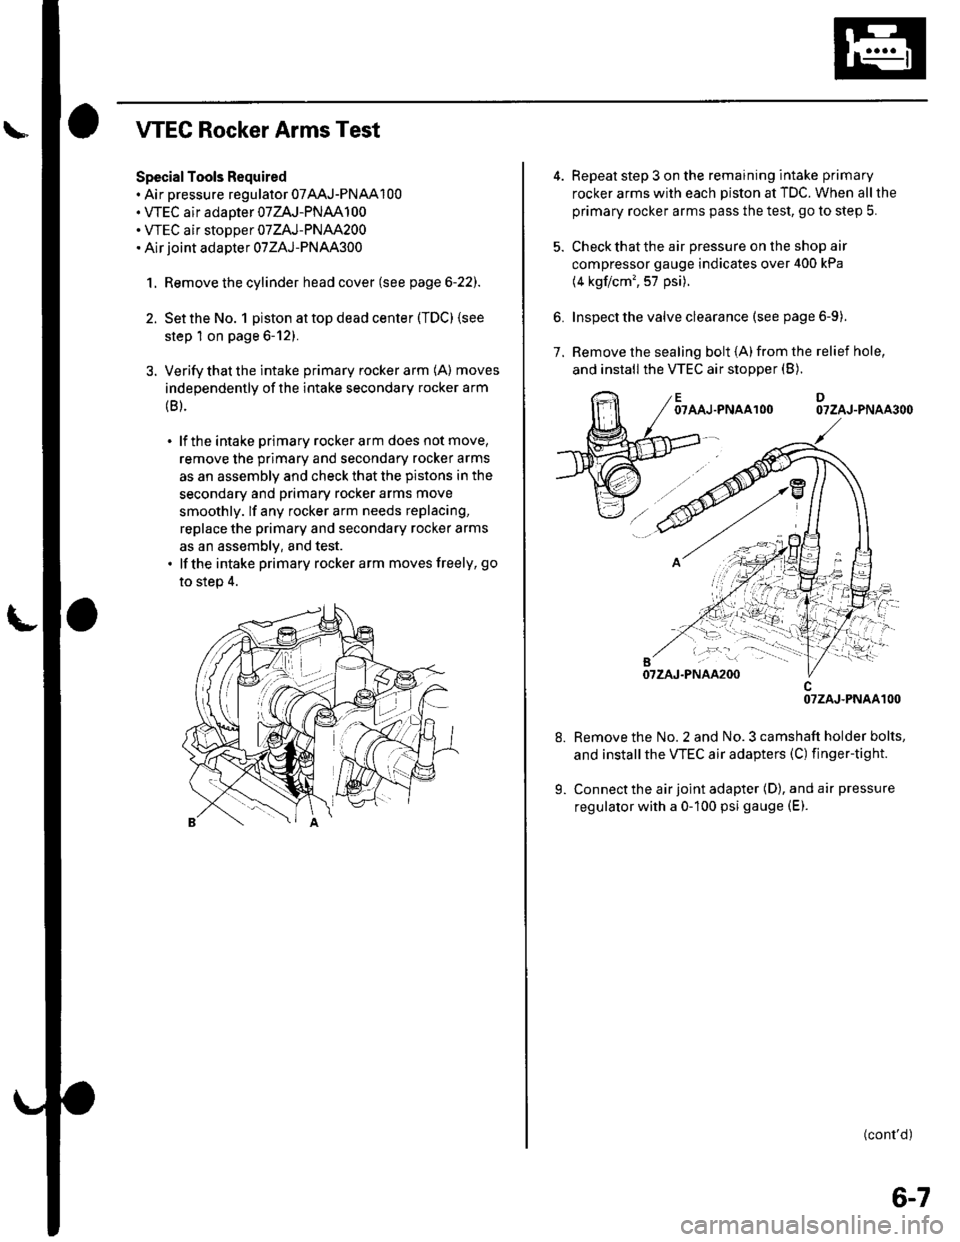 HONDA CIVIC 2003 7.G Workshop Manual WEC Rocker Arms Test
Special Tools Required. Air pressure regulator 07AAJ-PNAA100. VTEC air adaoter 07ZAJ-PNAA100. WEC air stoDoer 07ZAJ-PNAA200. Air joint adapter 07ZAJ-PNAA300
1. Remove the cylinder